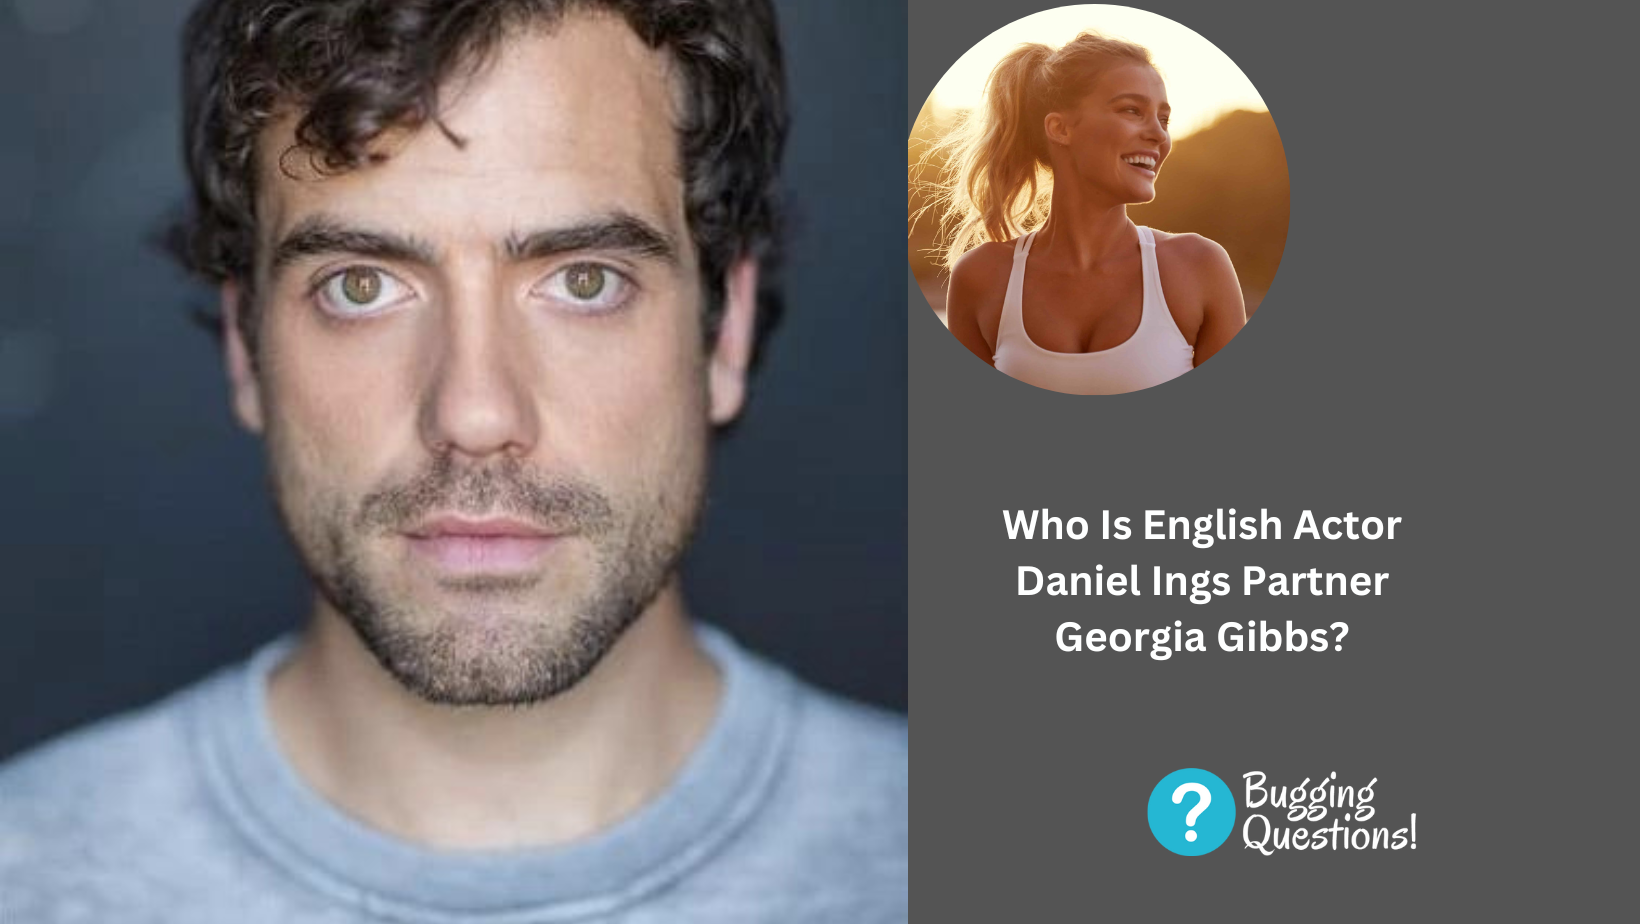 Who Is English Actor Daniel Ings Partner Georgia Gibbs?